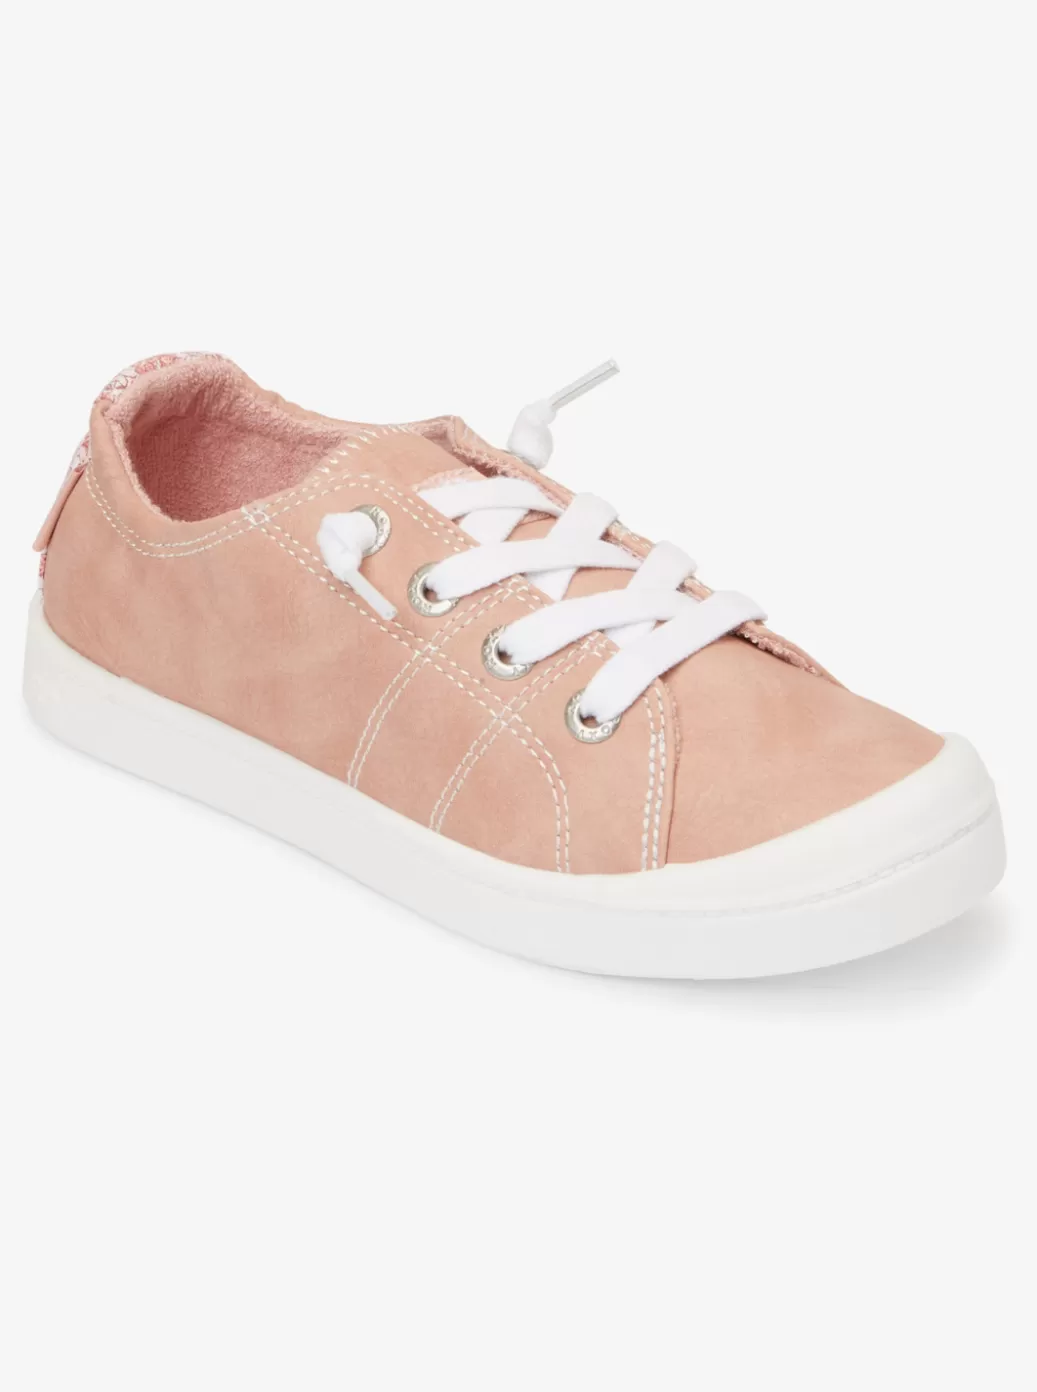 Shoes & Sandals | KIDS ROXY Girl's 4-16 Bayshore Plus Slip-On Shoes Blush